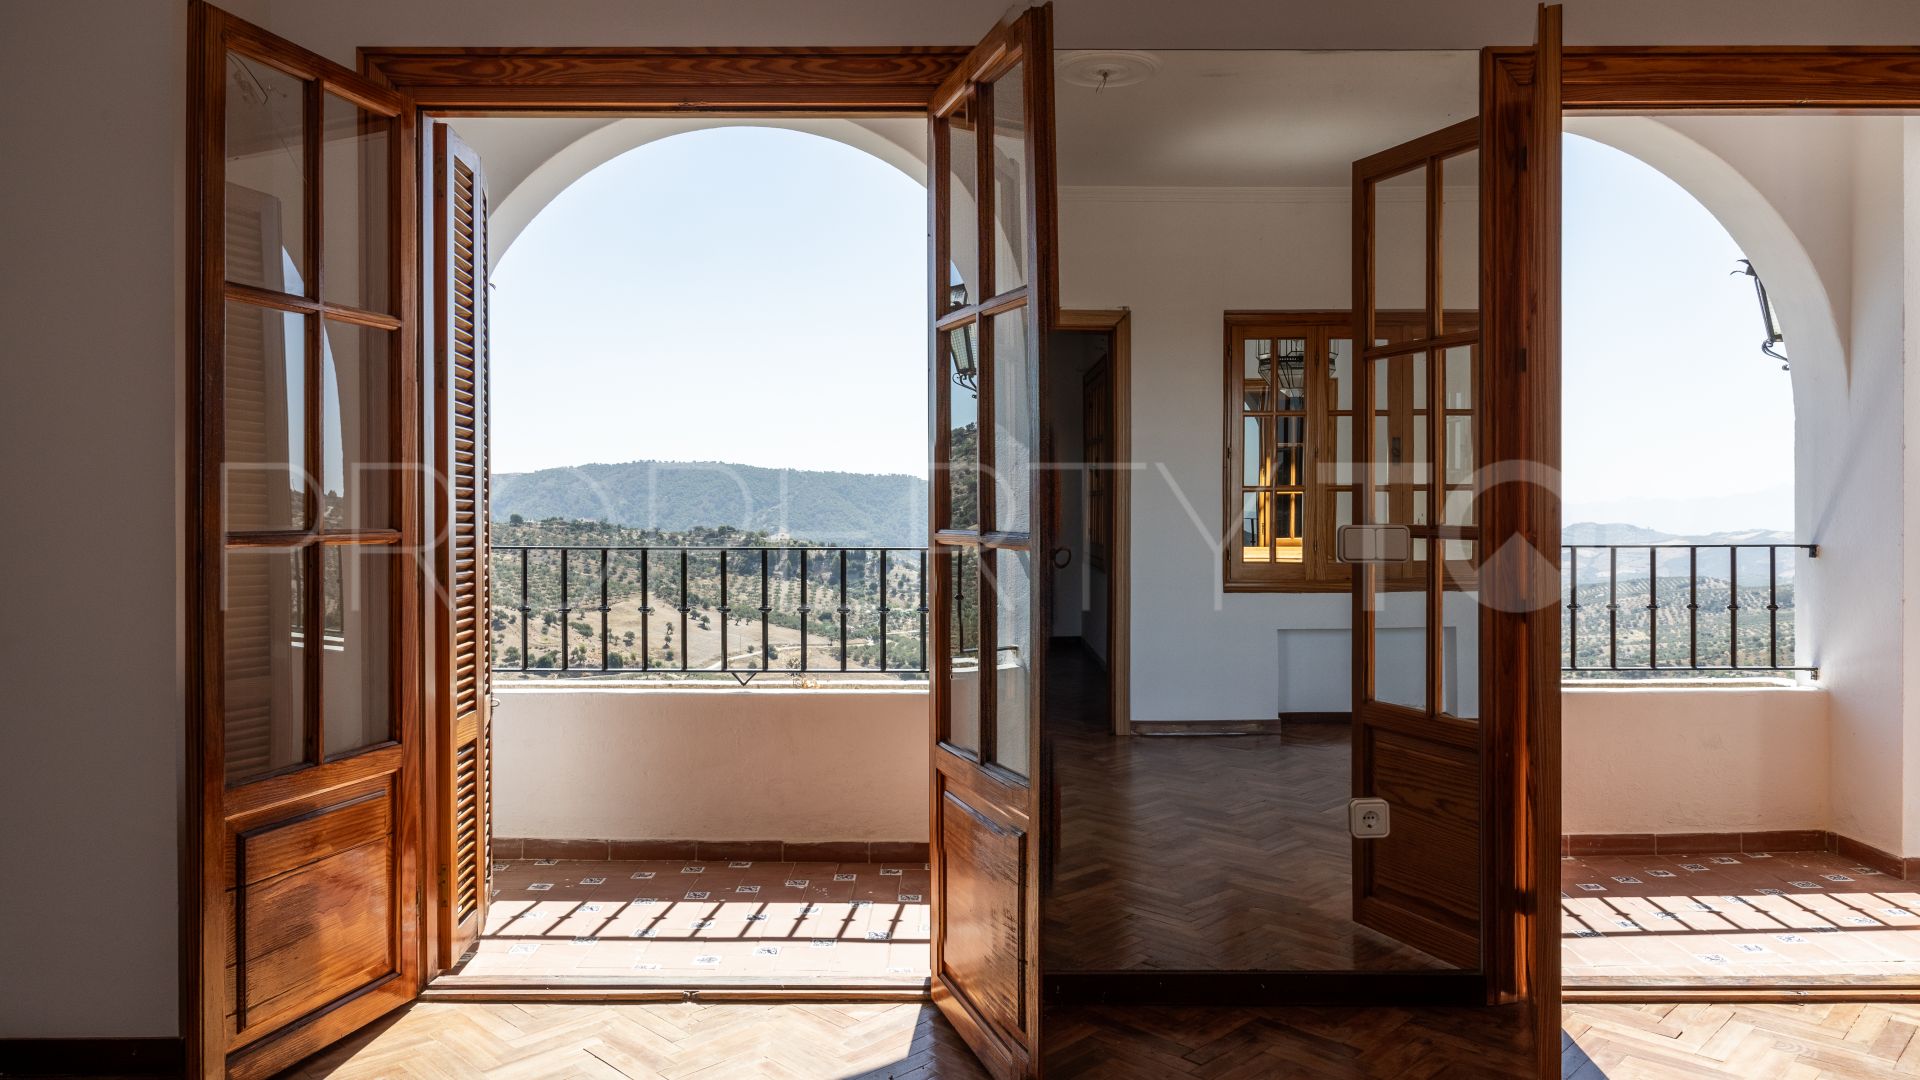 Villa for sale in Casarabonela with 9 bedrooms